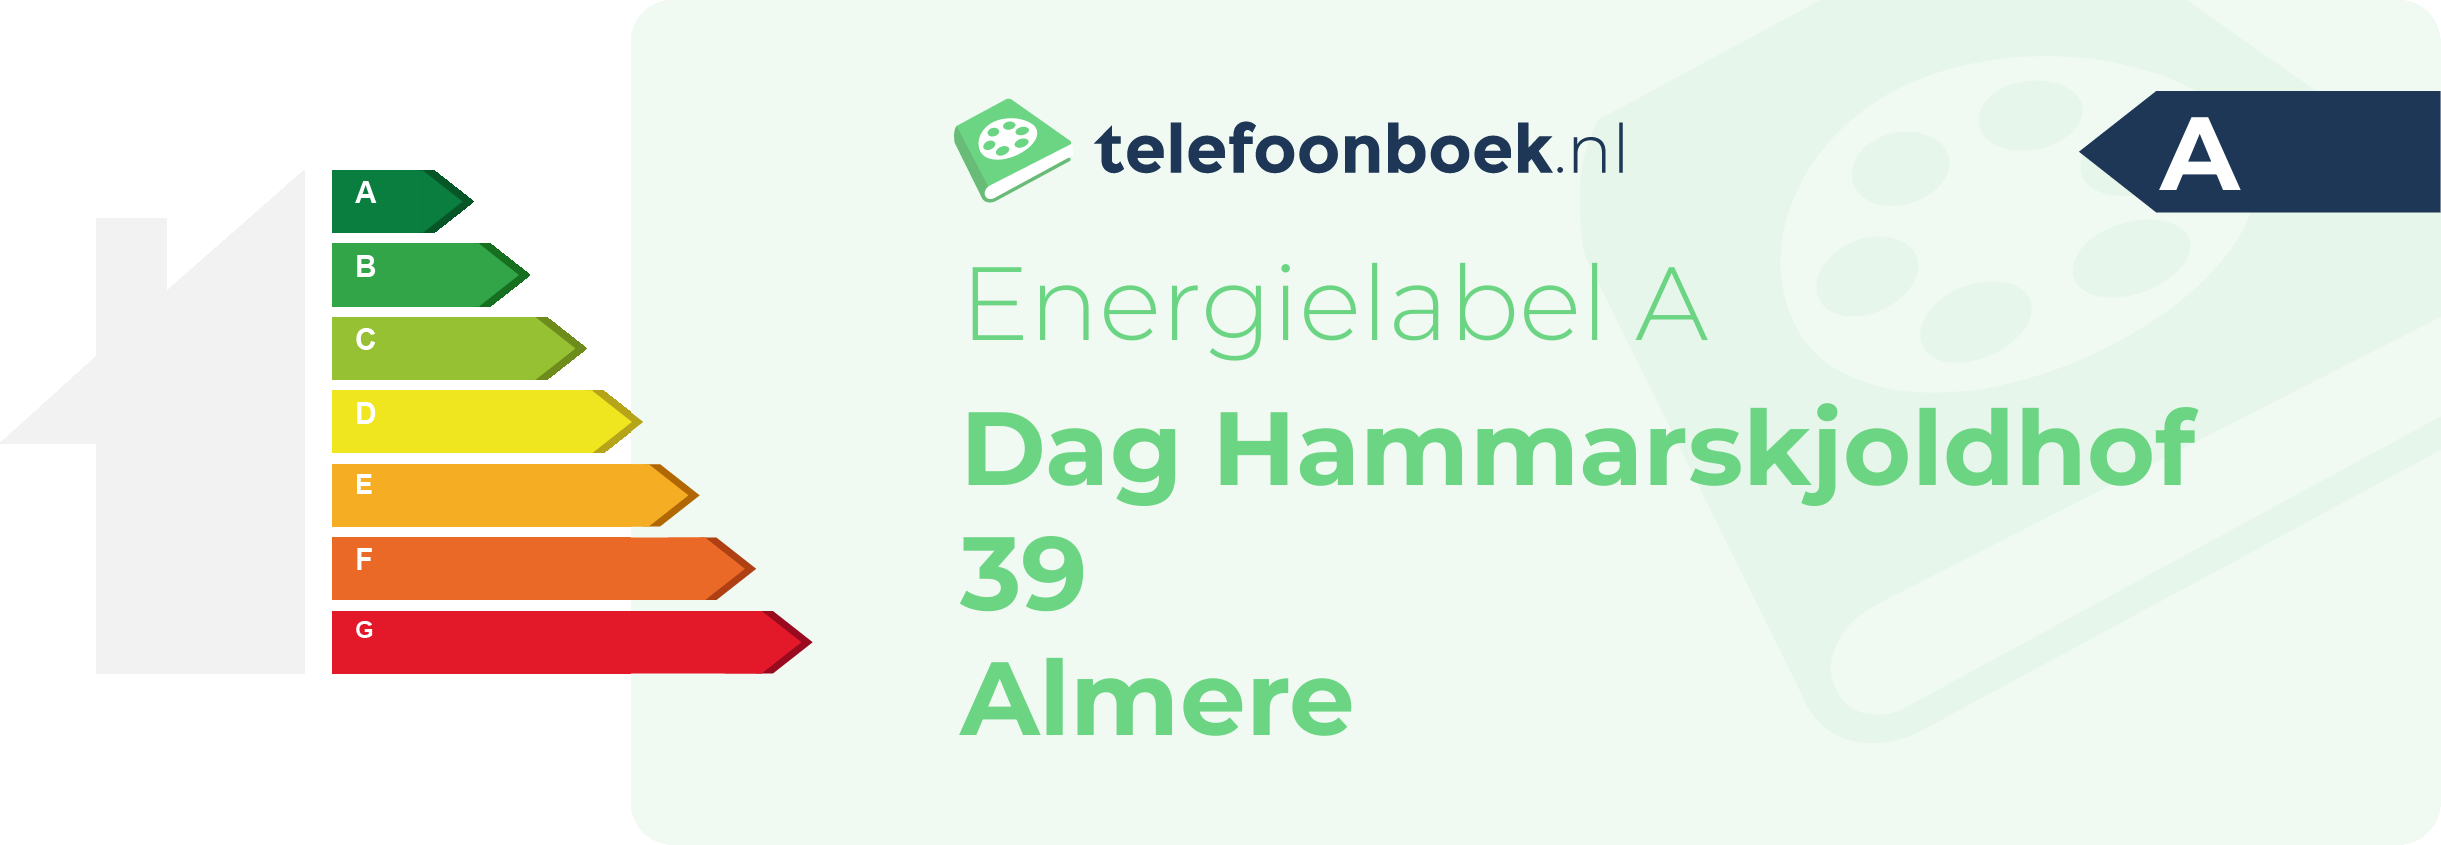 Energielabel Dag Hammarskjoldhof 39 Almere